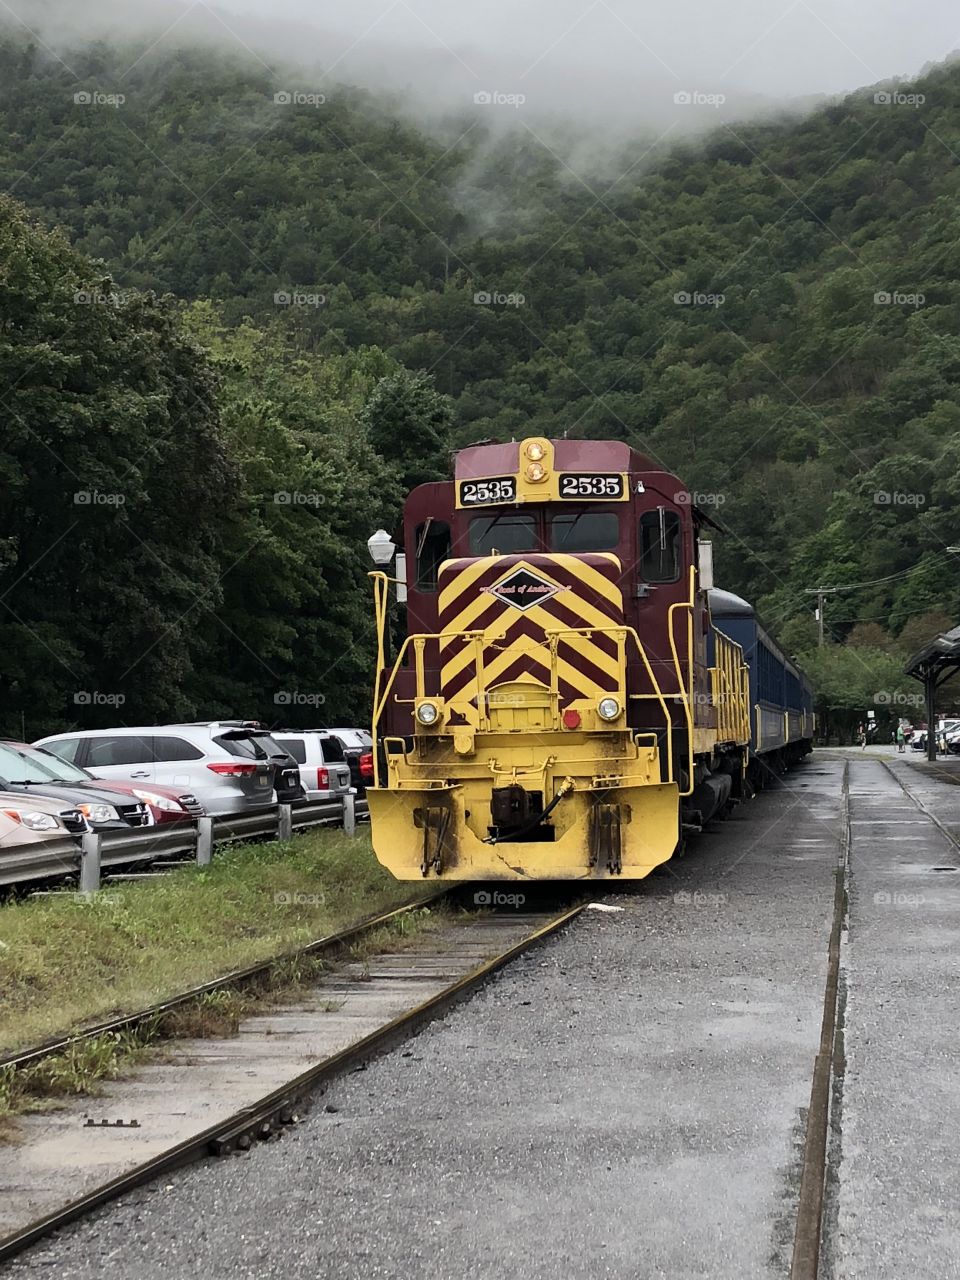 Train engine